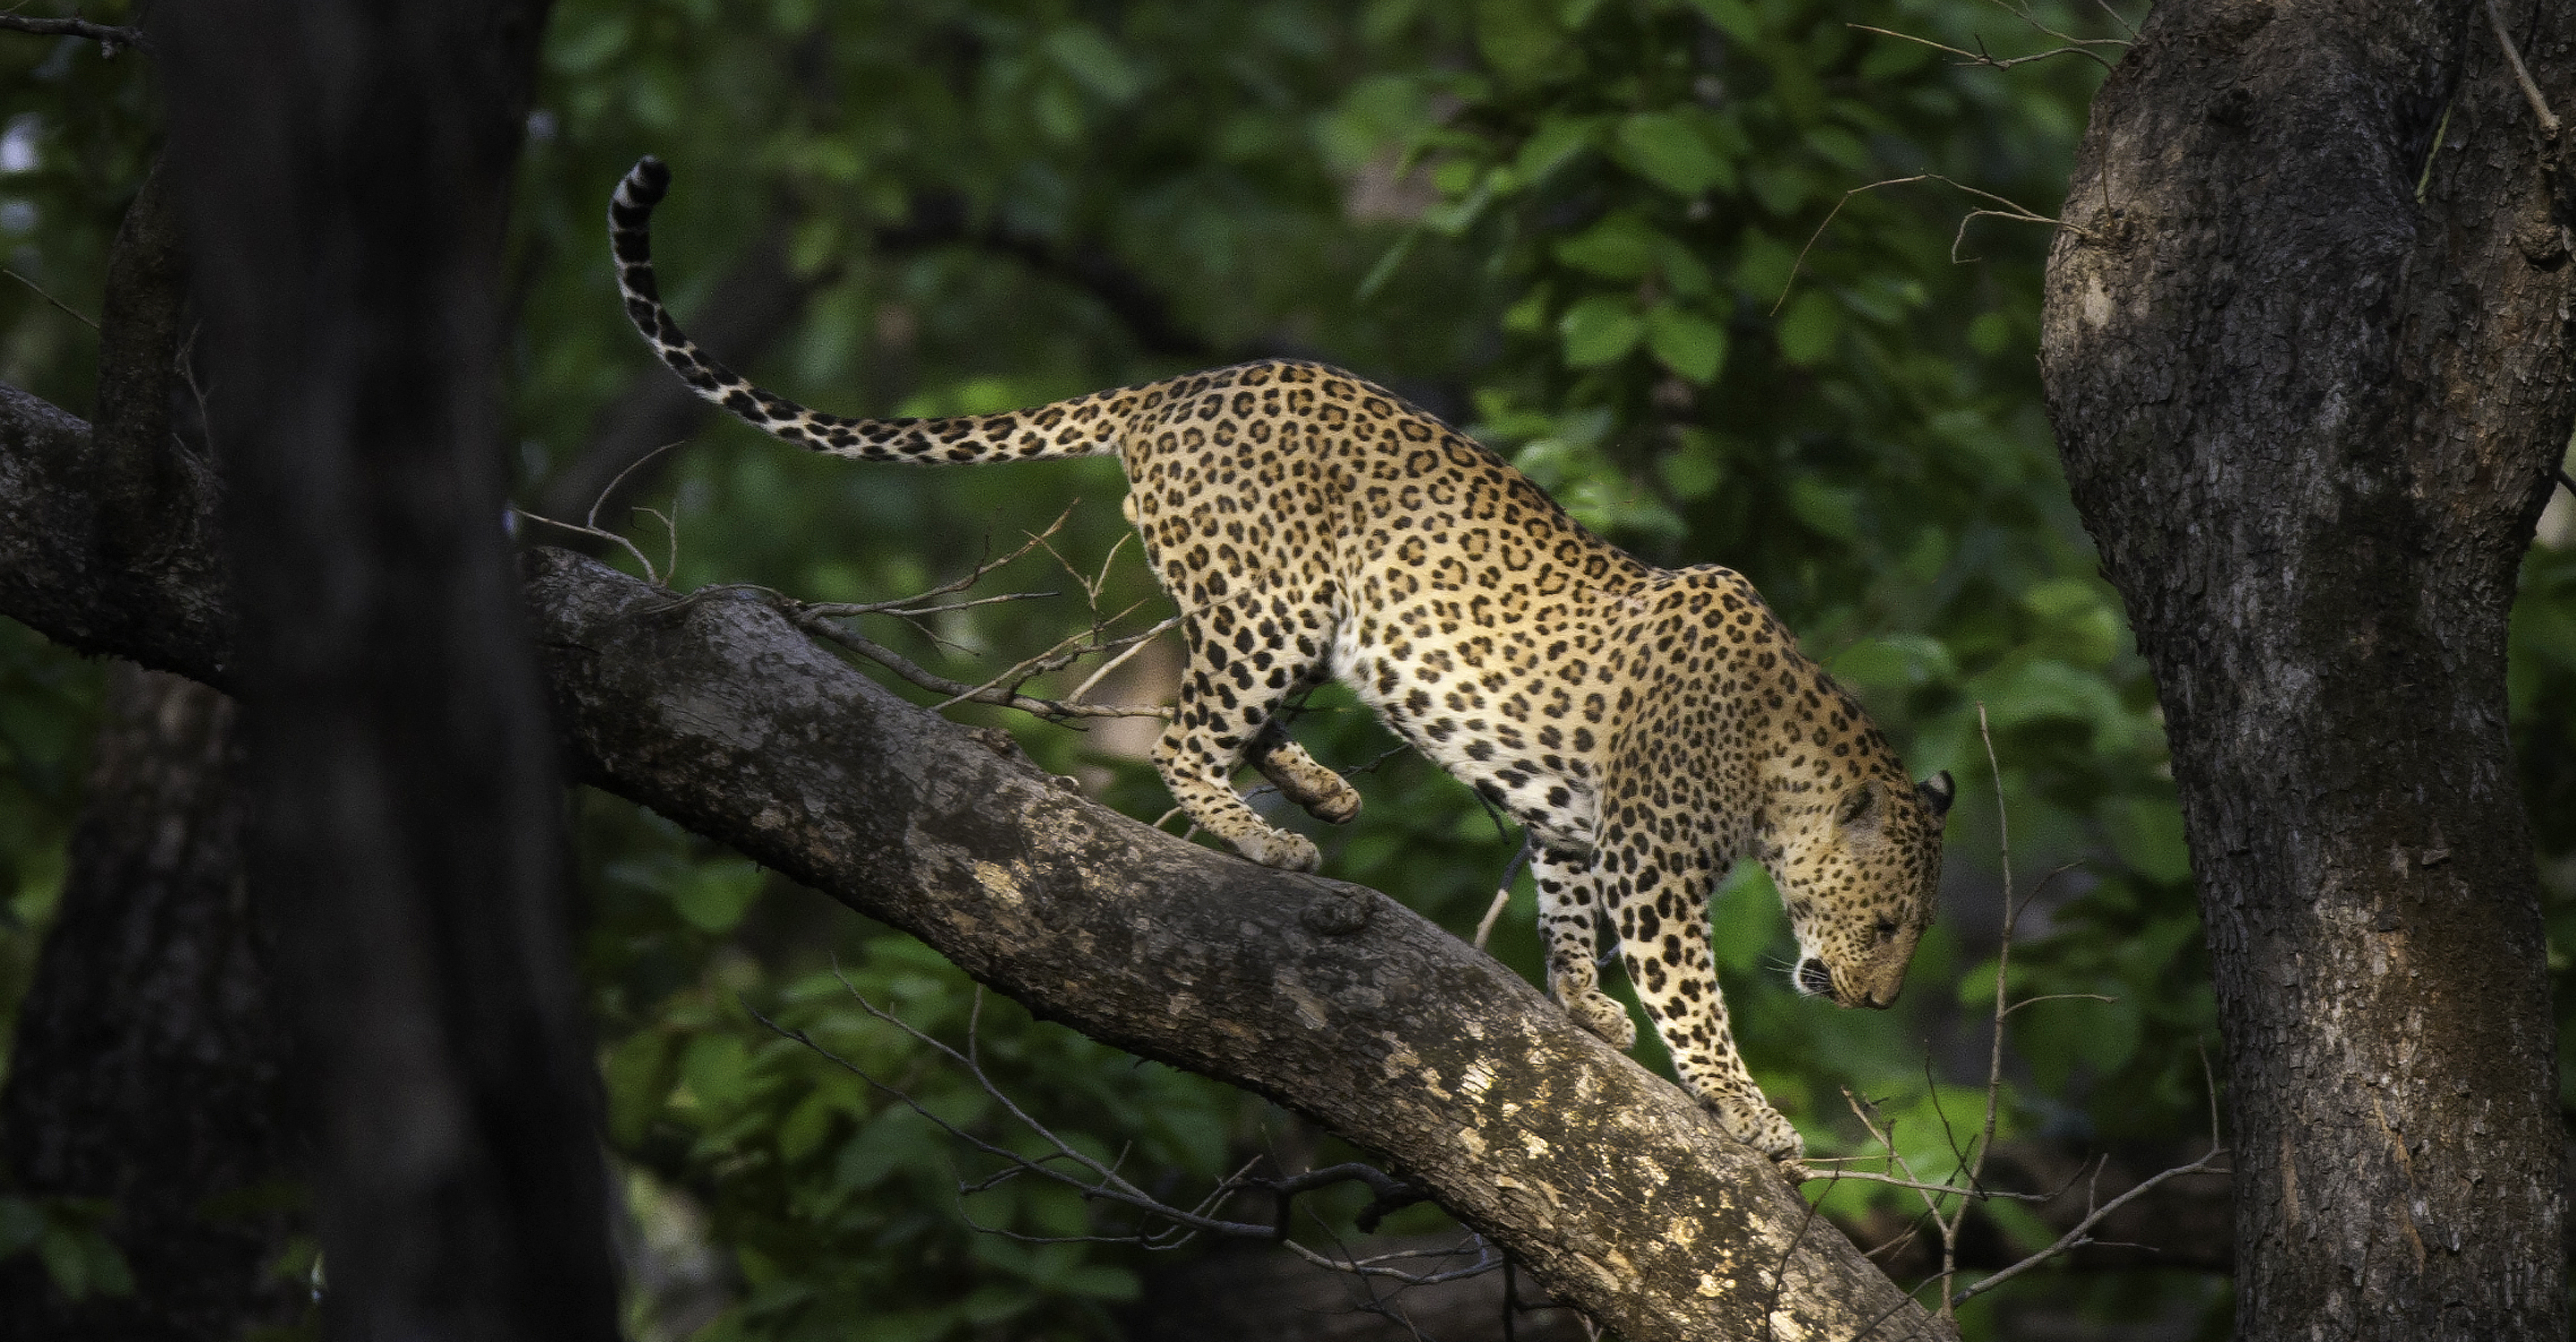 A leopard walks down a tree branch in Jhalana Leopard Reserve, India